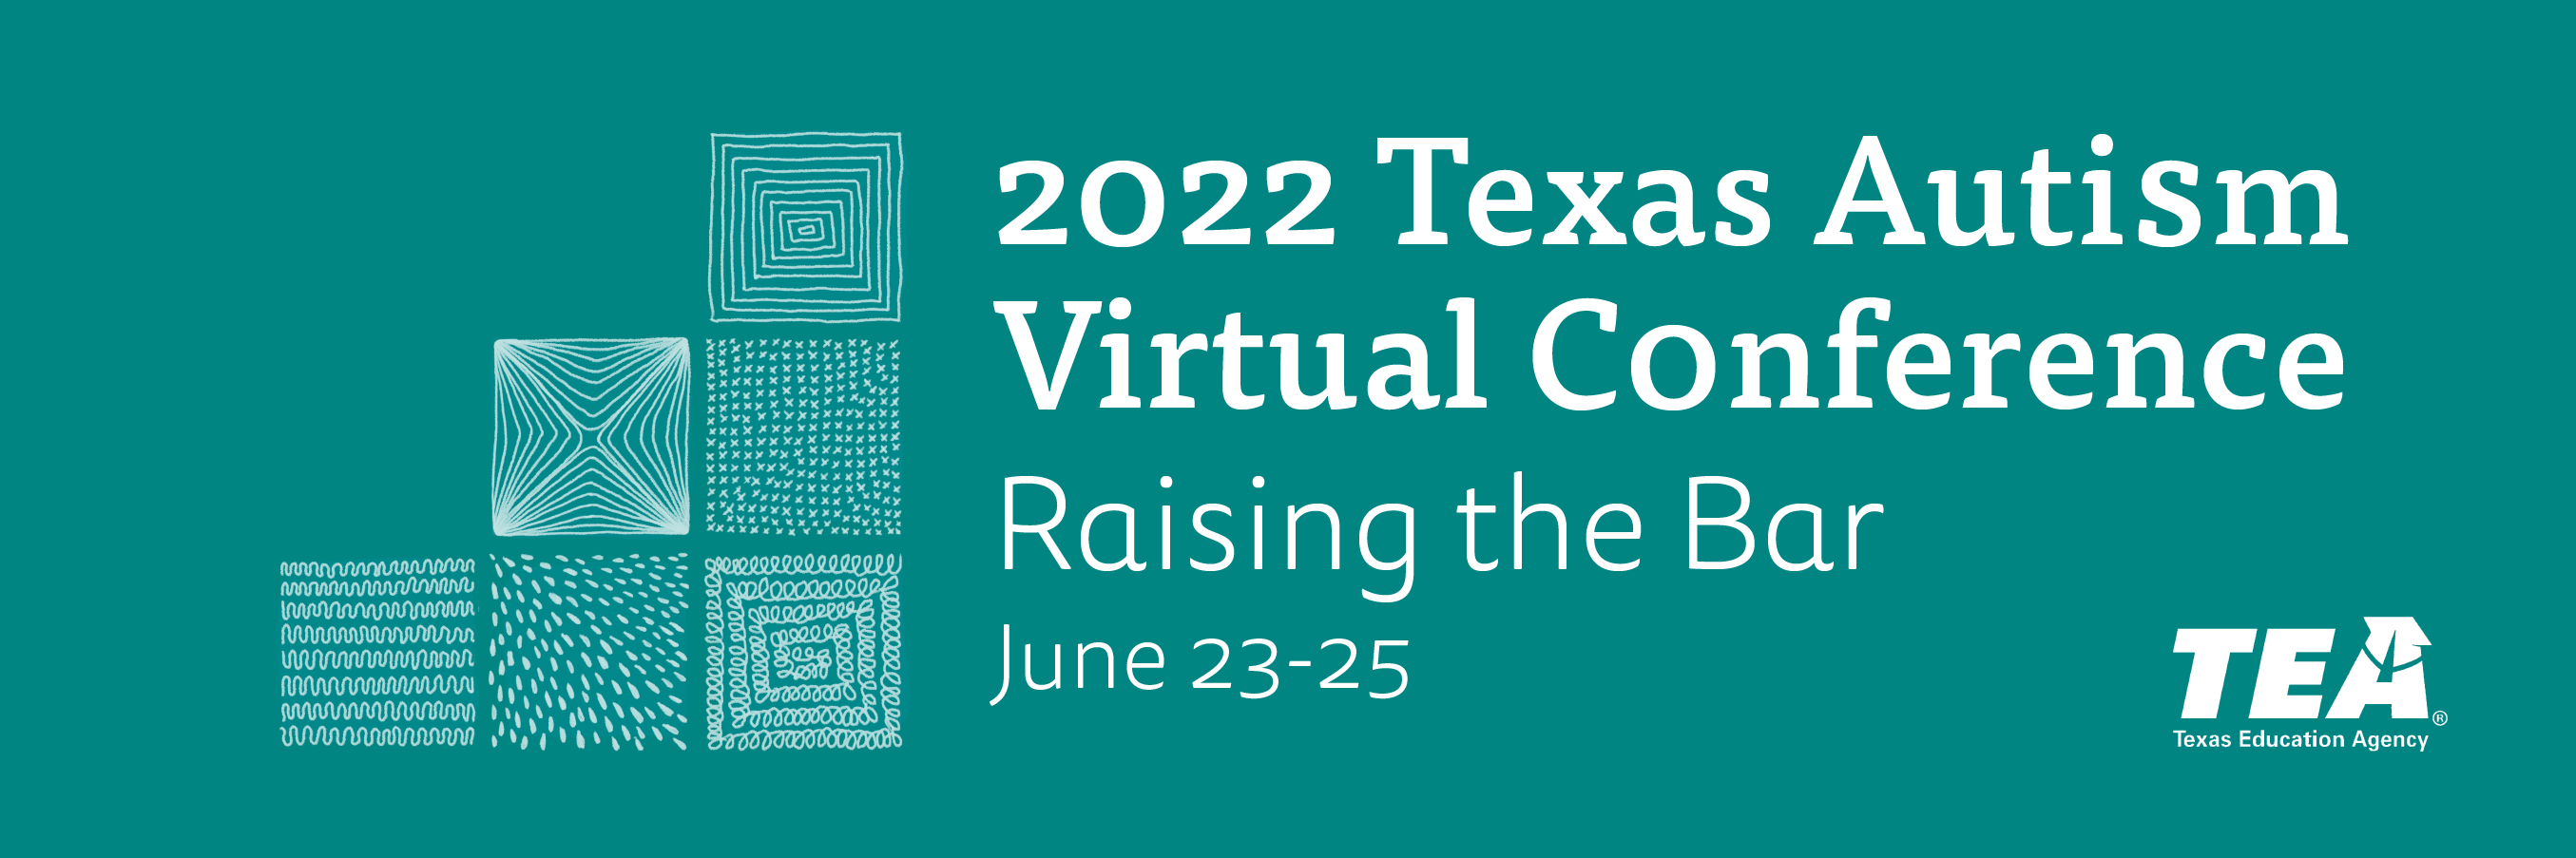 2022 Texas Autism Virtual Conference, Raising the Bar June 23-25